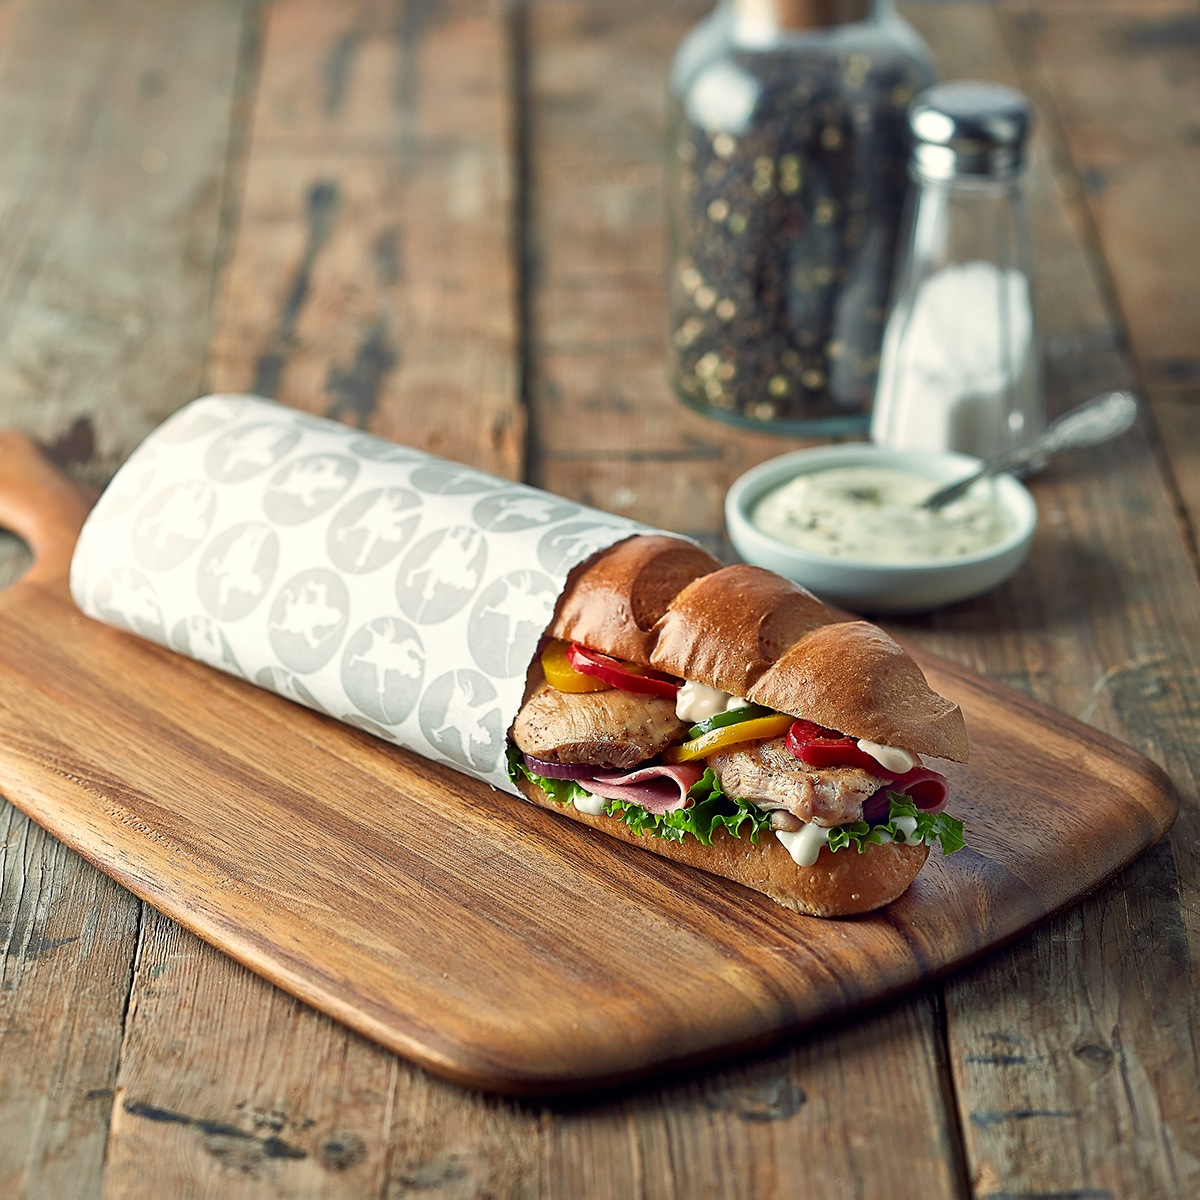 food styling food photography Shish Tawook chicken fatta burger nutella sandwich